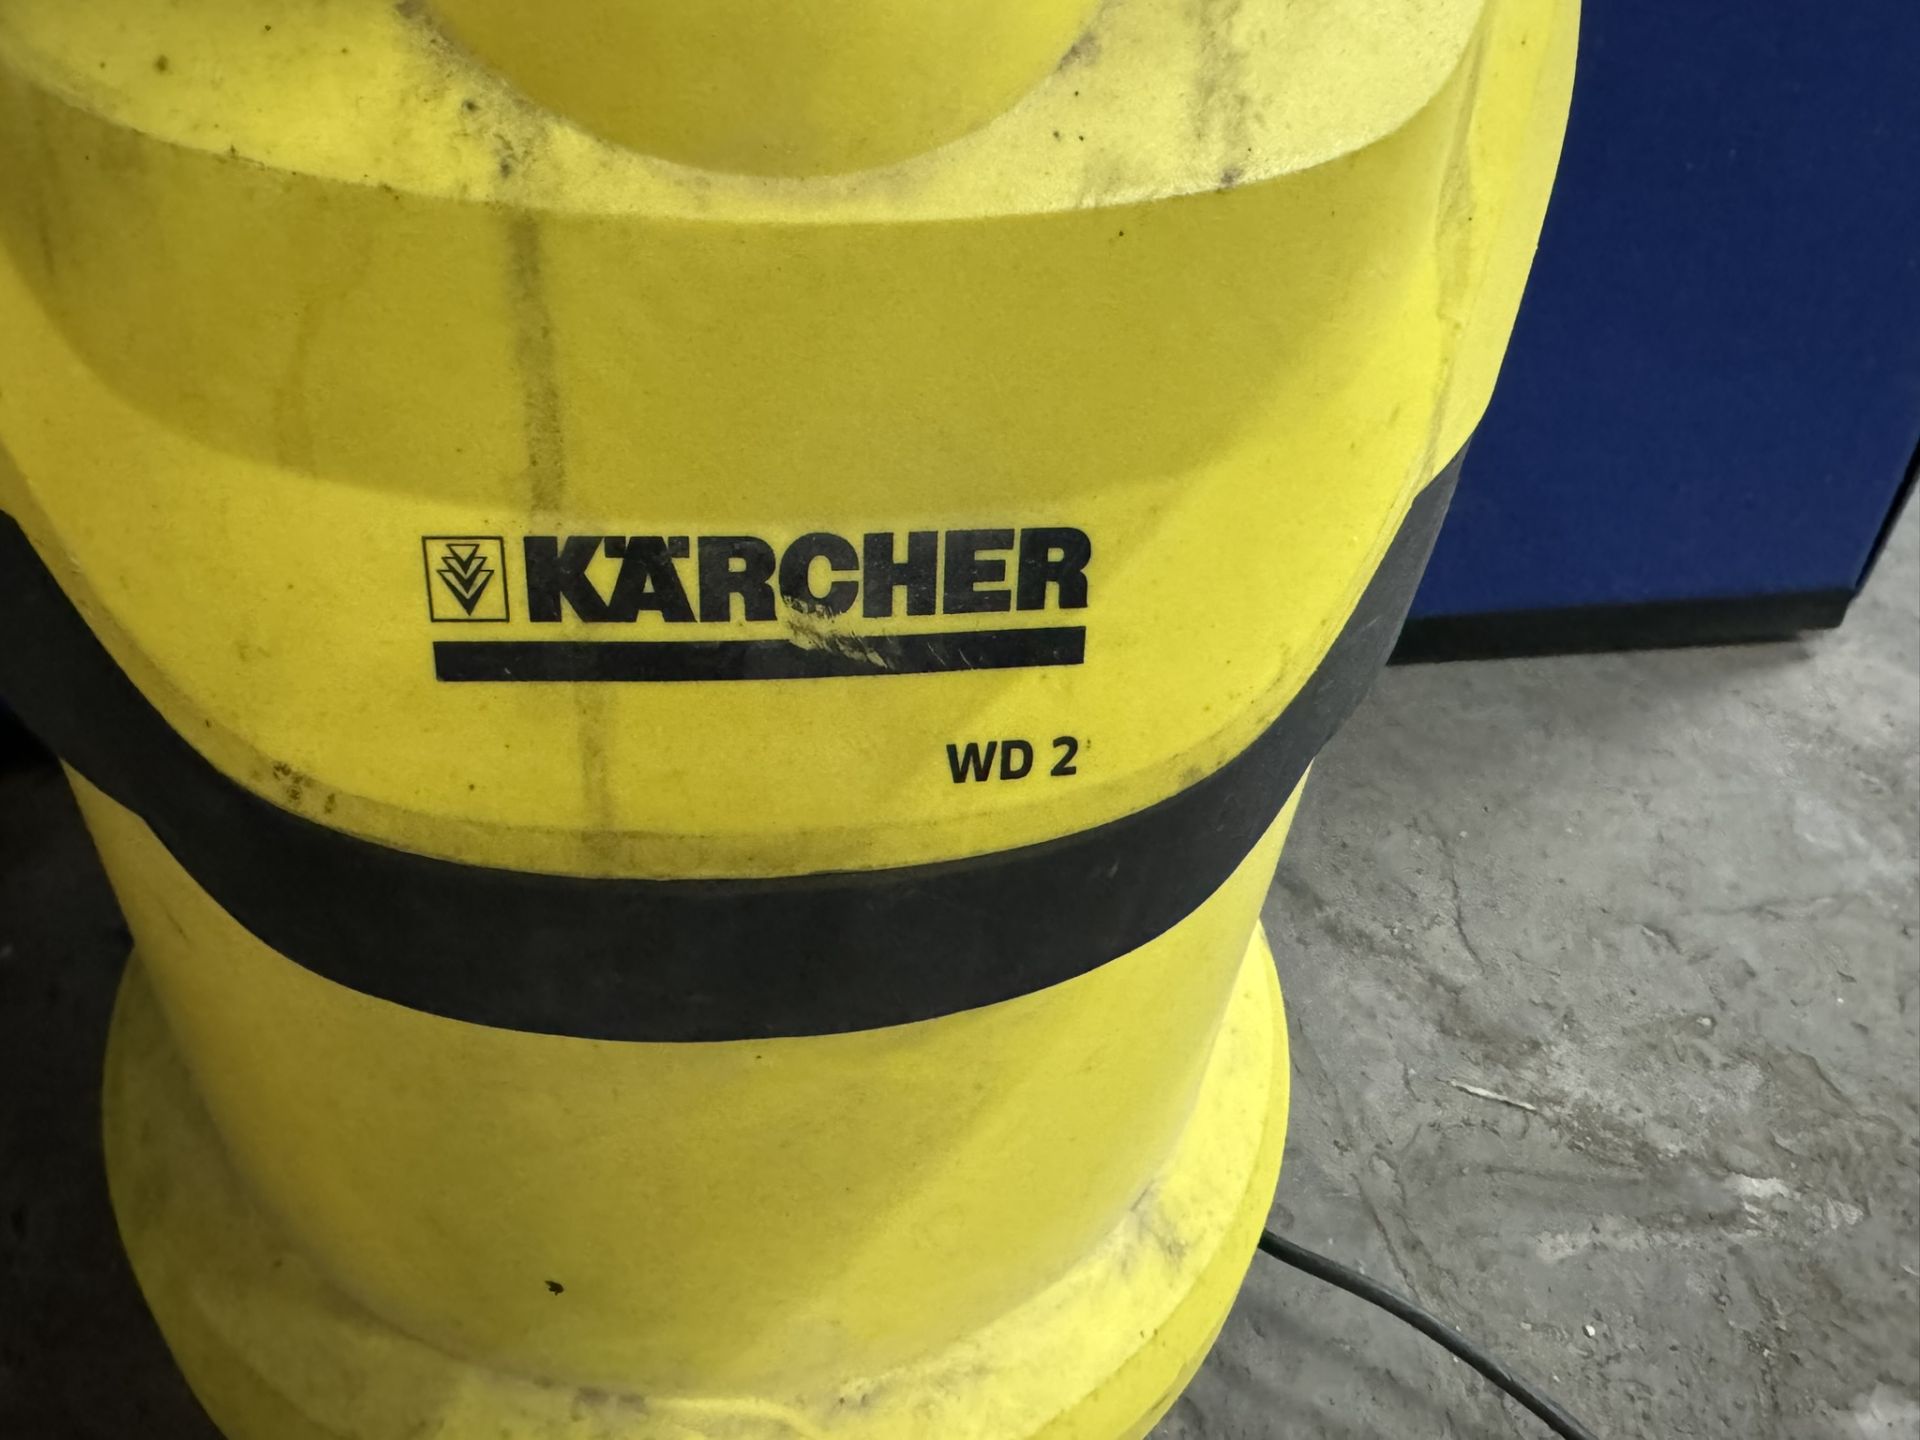 Karcher WD2 Cylinder Wet and Dry Vacuum Cleaner - Bild 3 aus 4